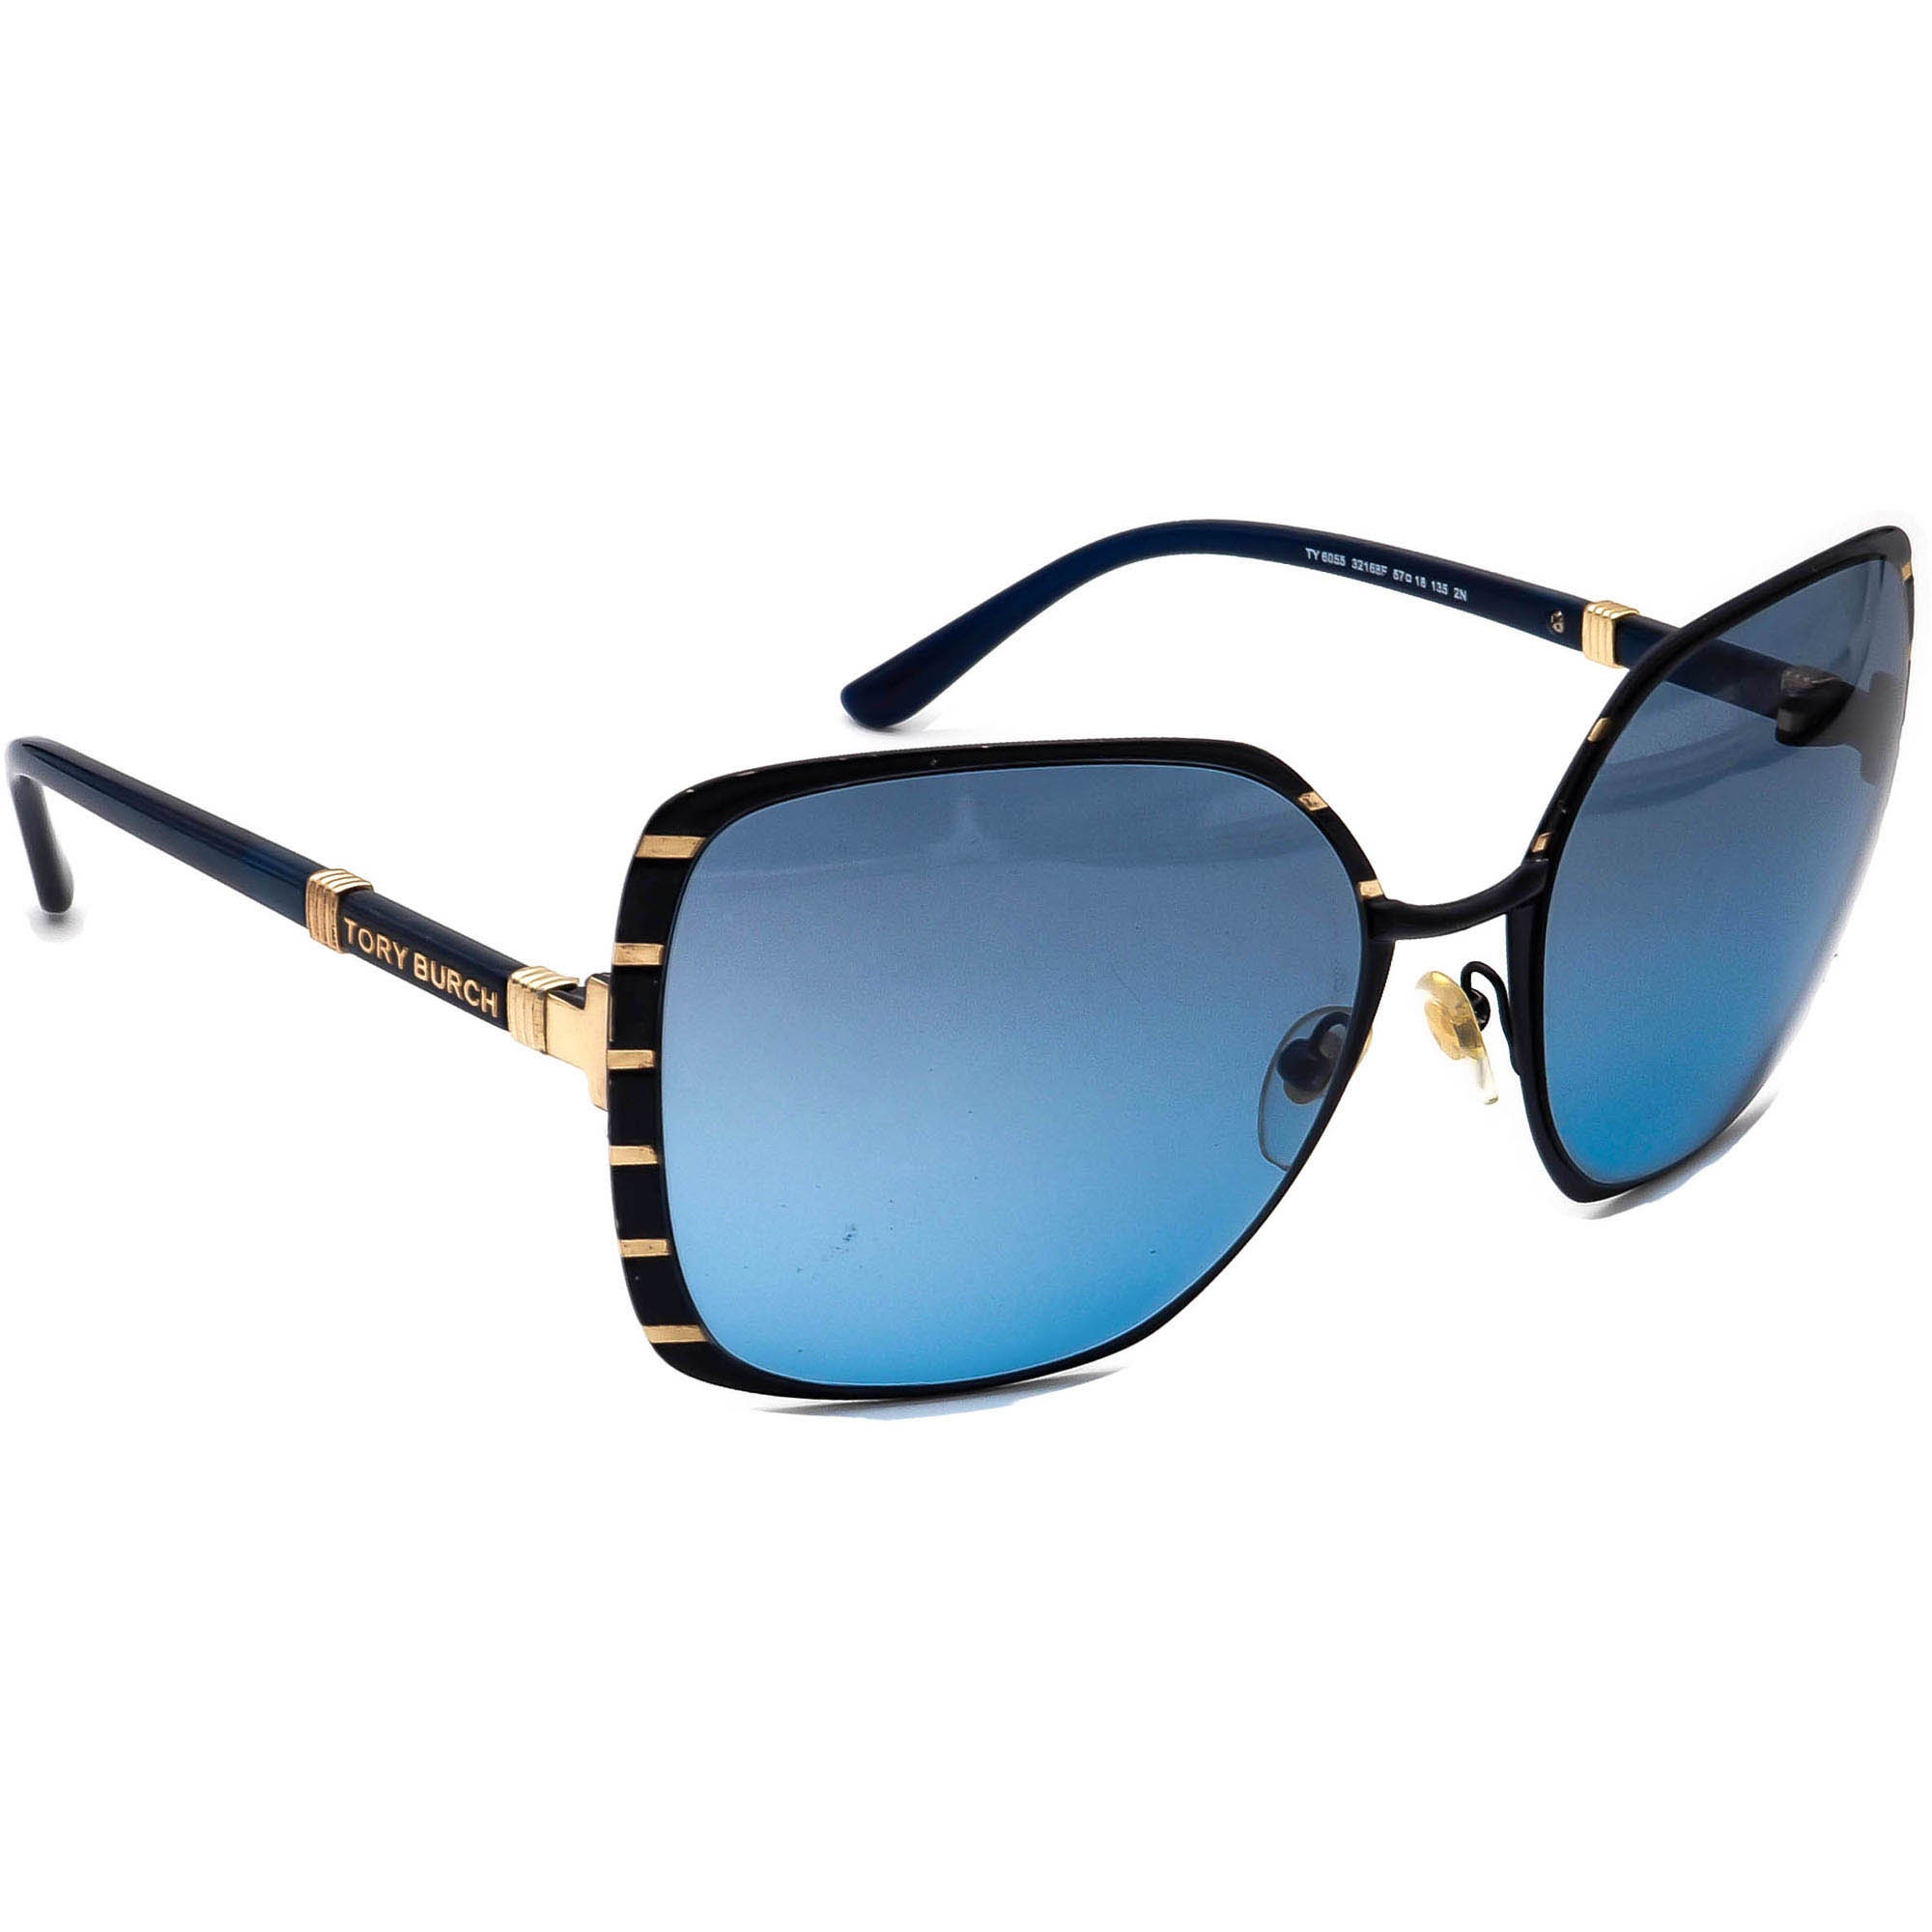 Tory Burch Women's Sunglasses TY 6055 32168F Blue/gold - Etsy India